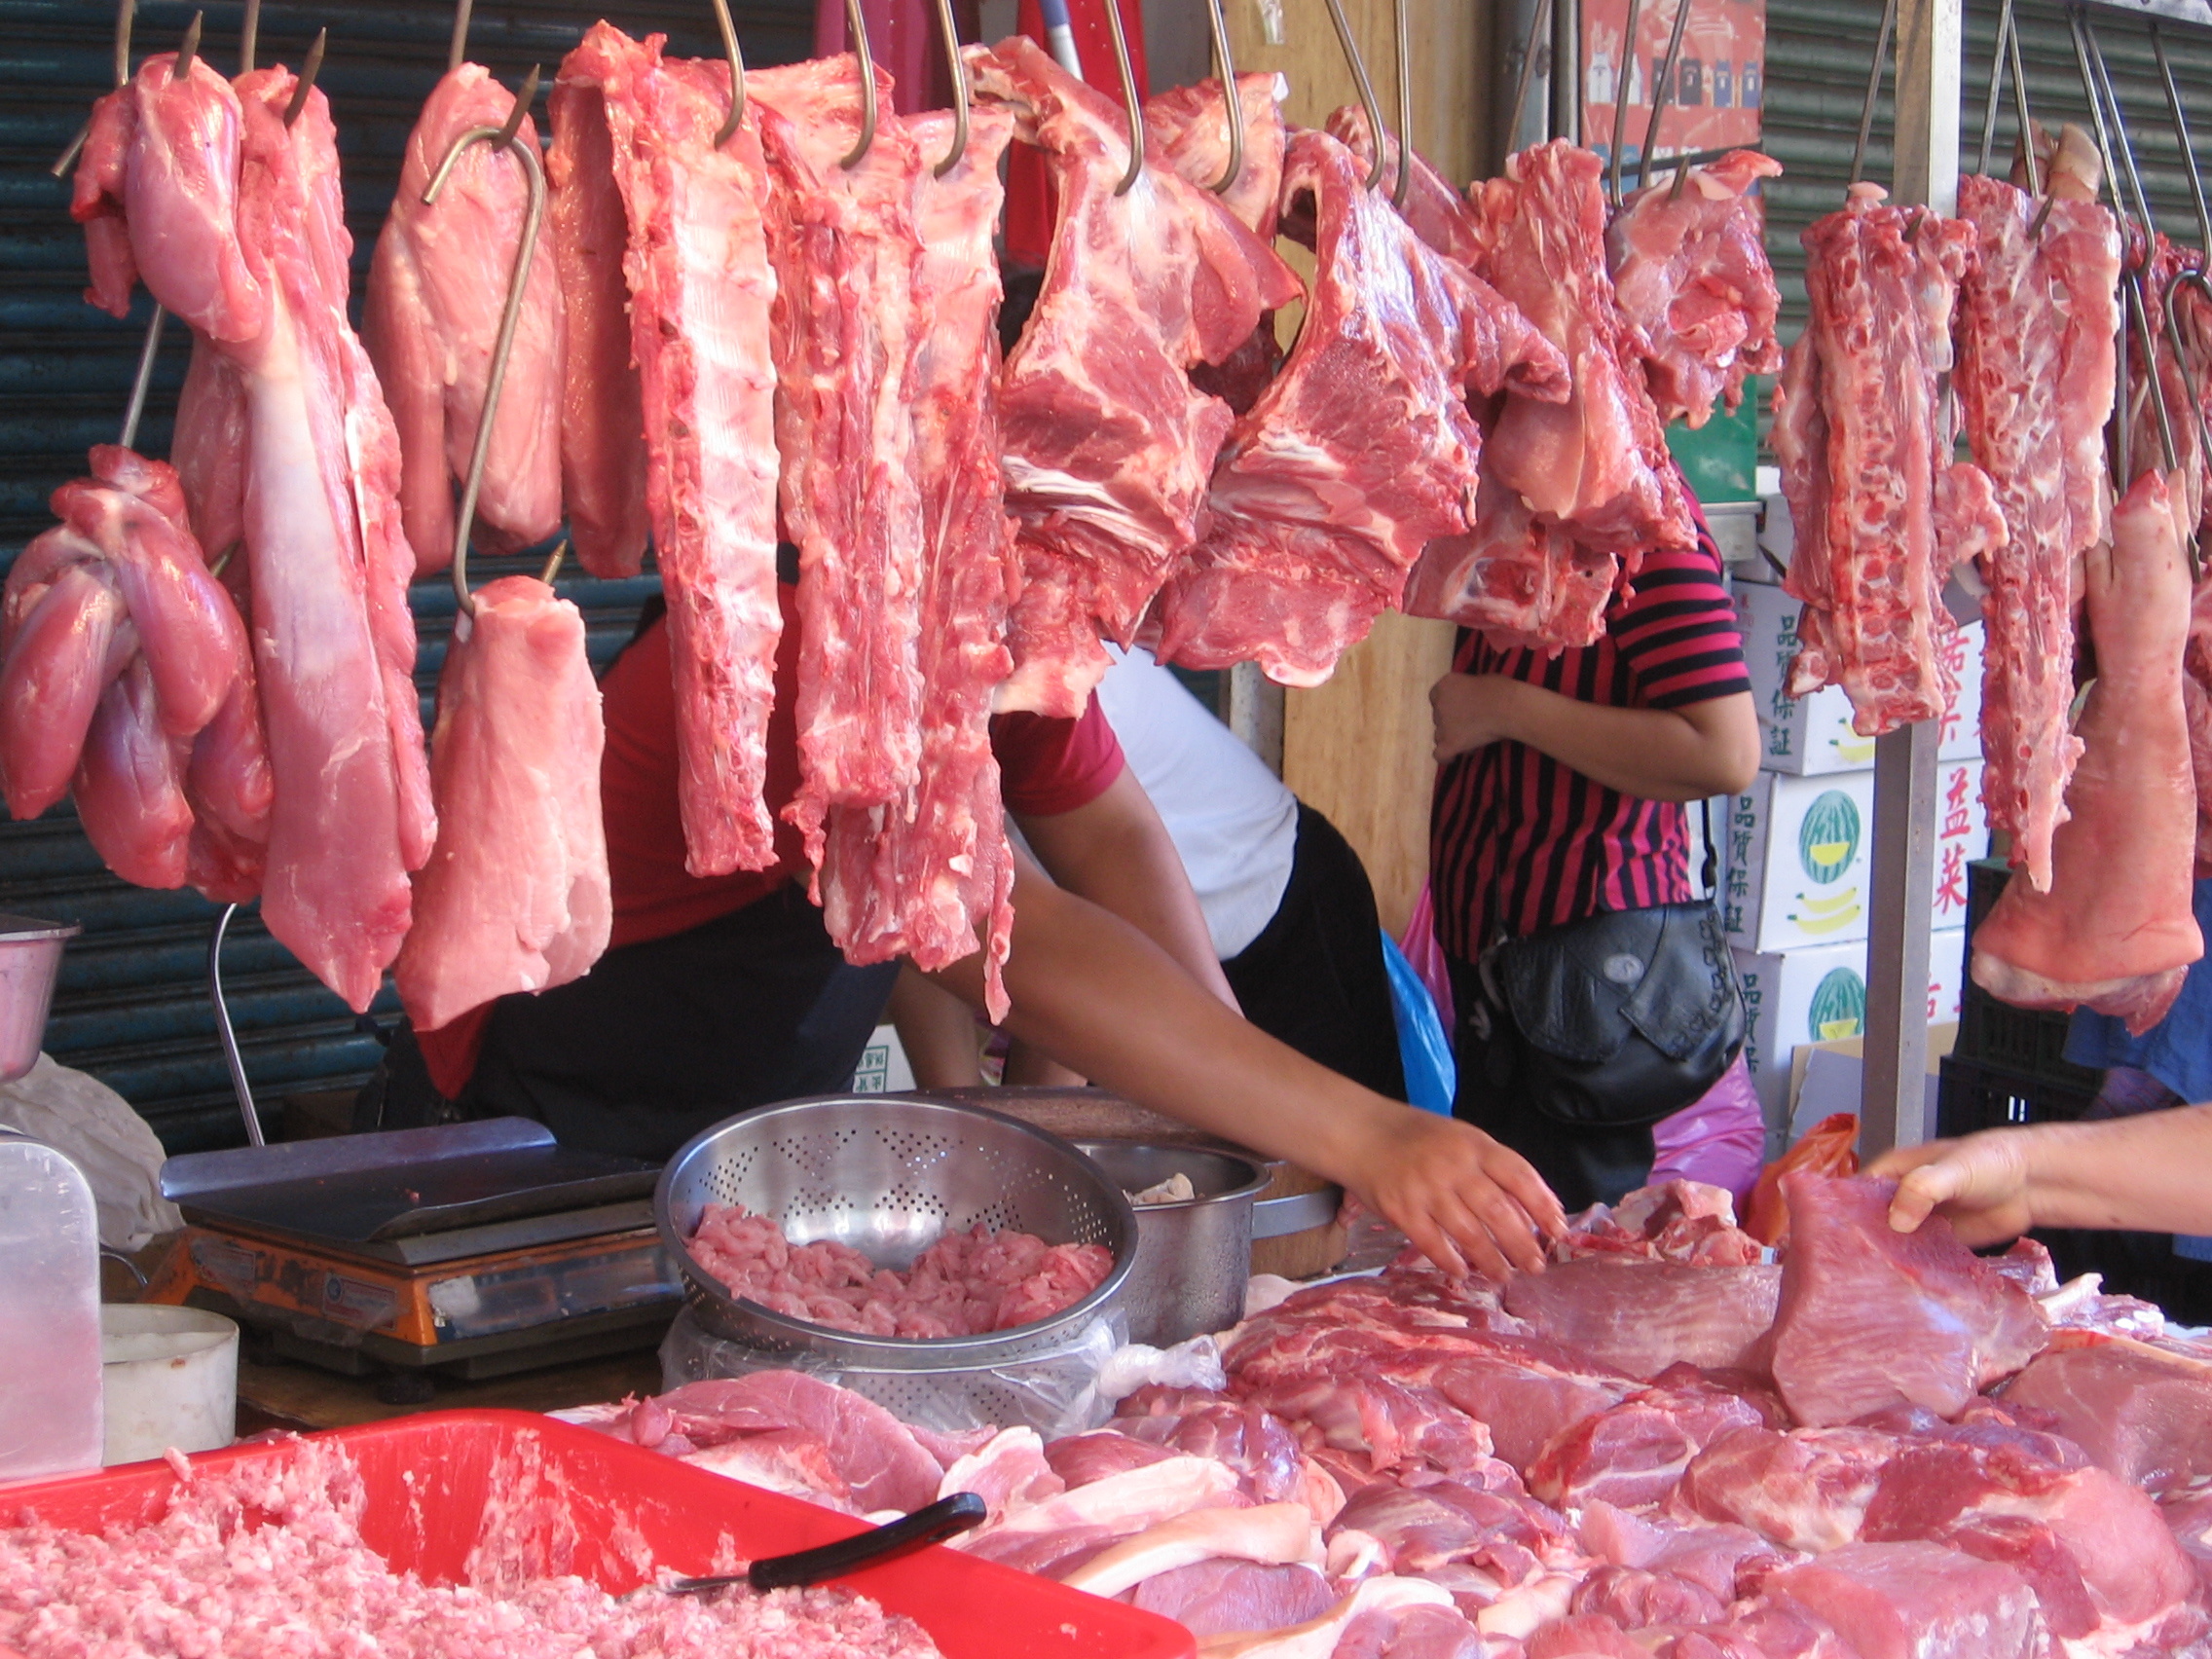 wet market selling pork in Asia